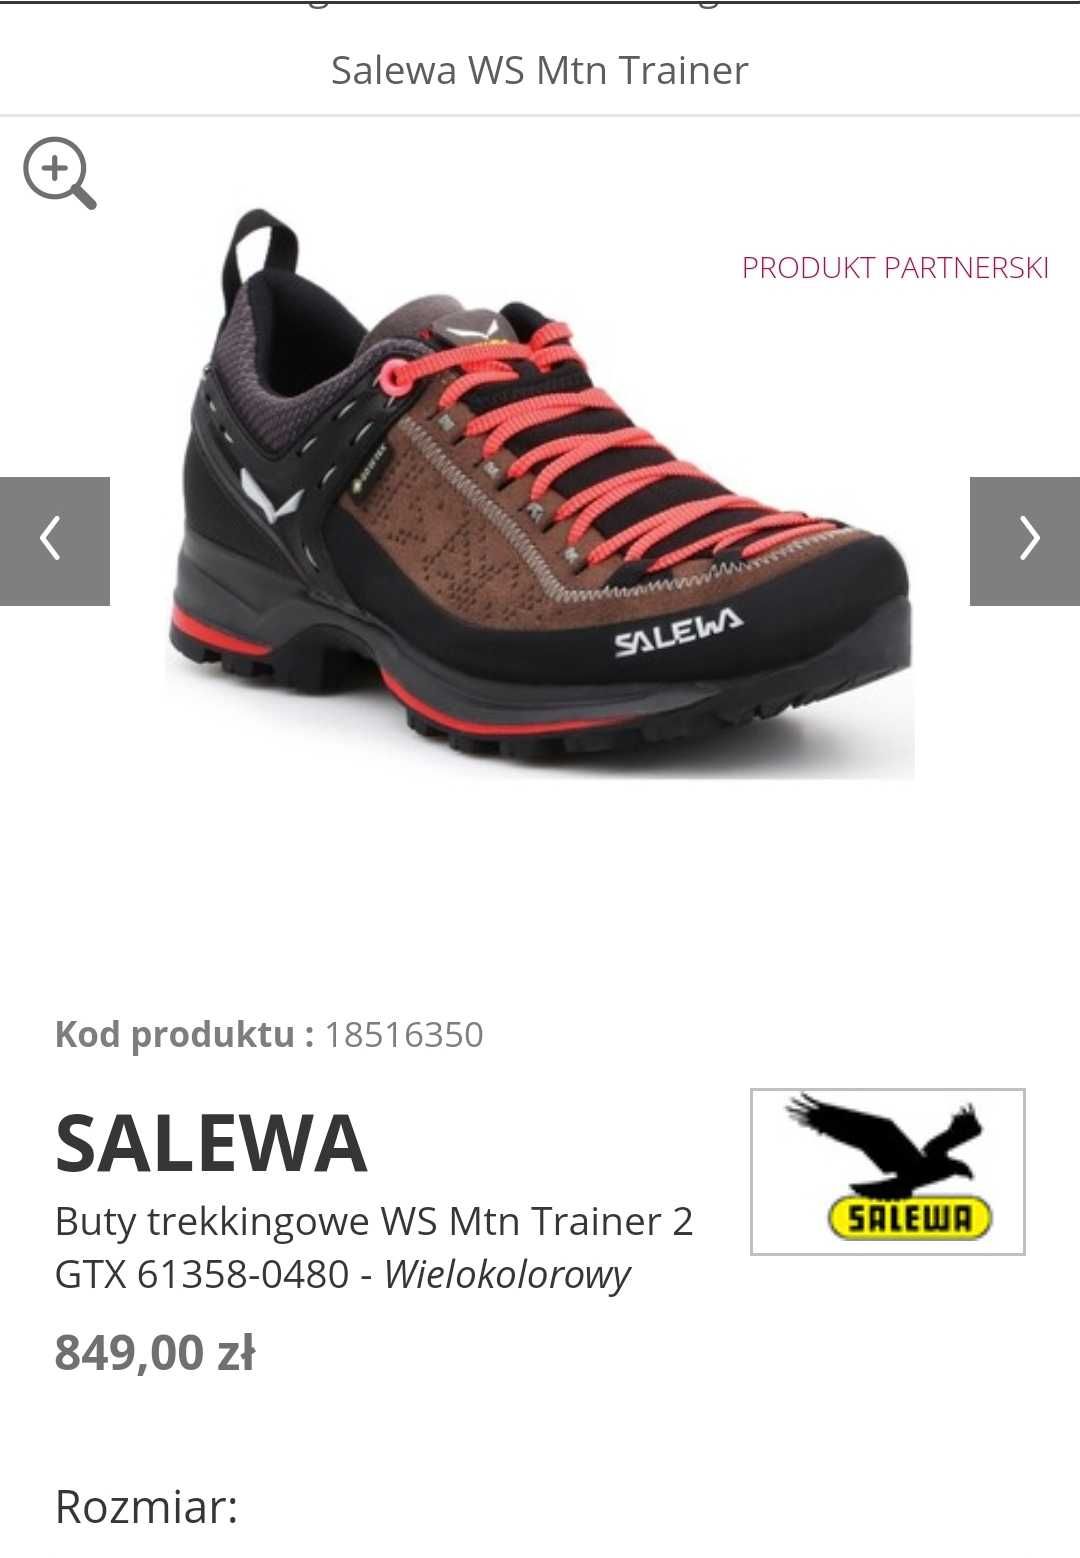 Salewa WS Mtn Trainer 2 gtx 40 Salewy